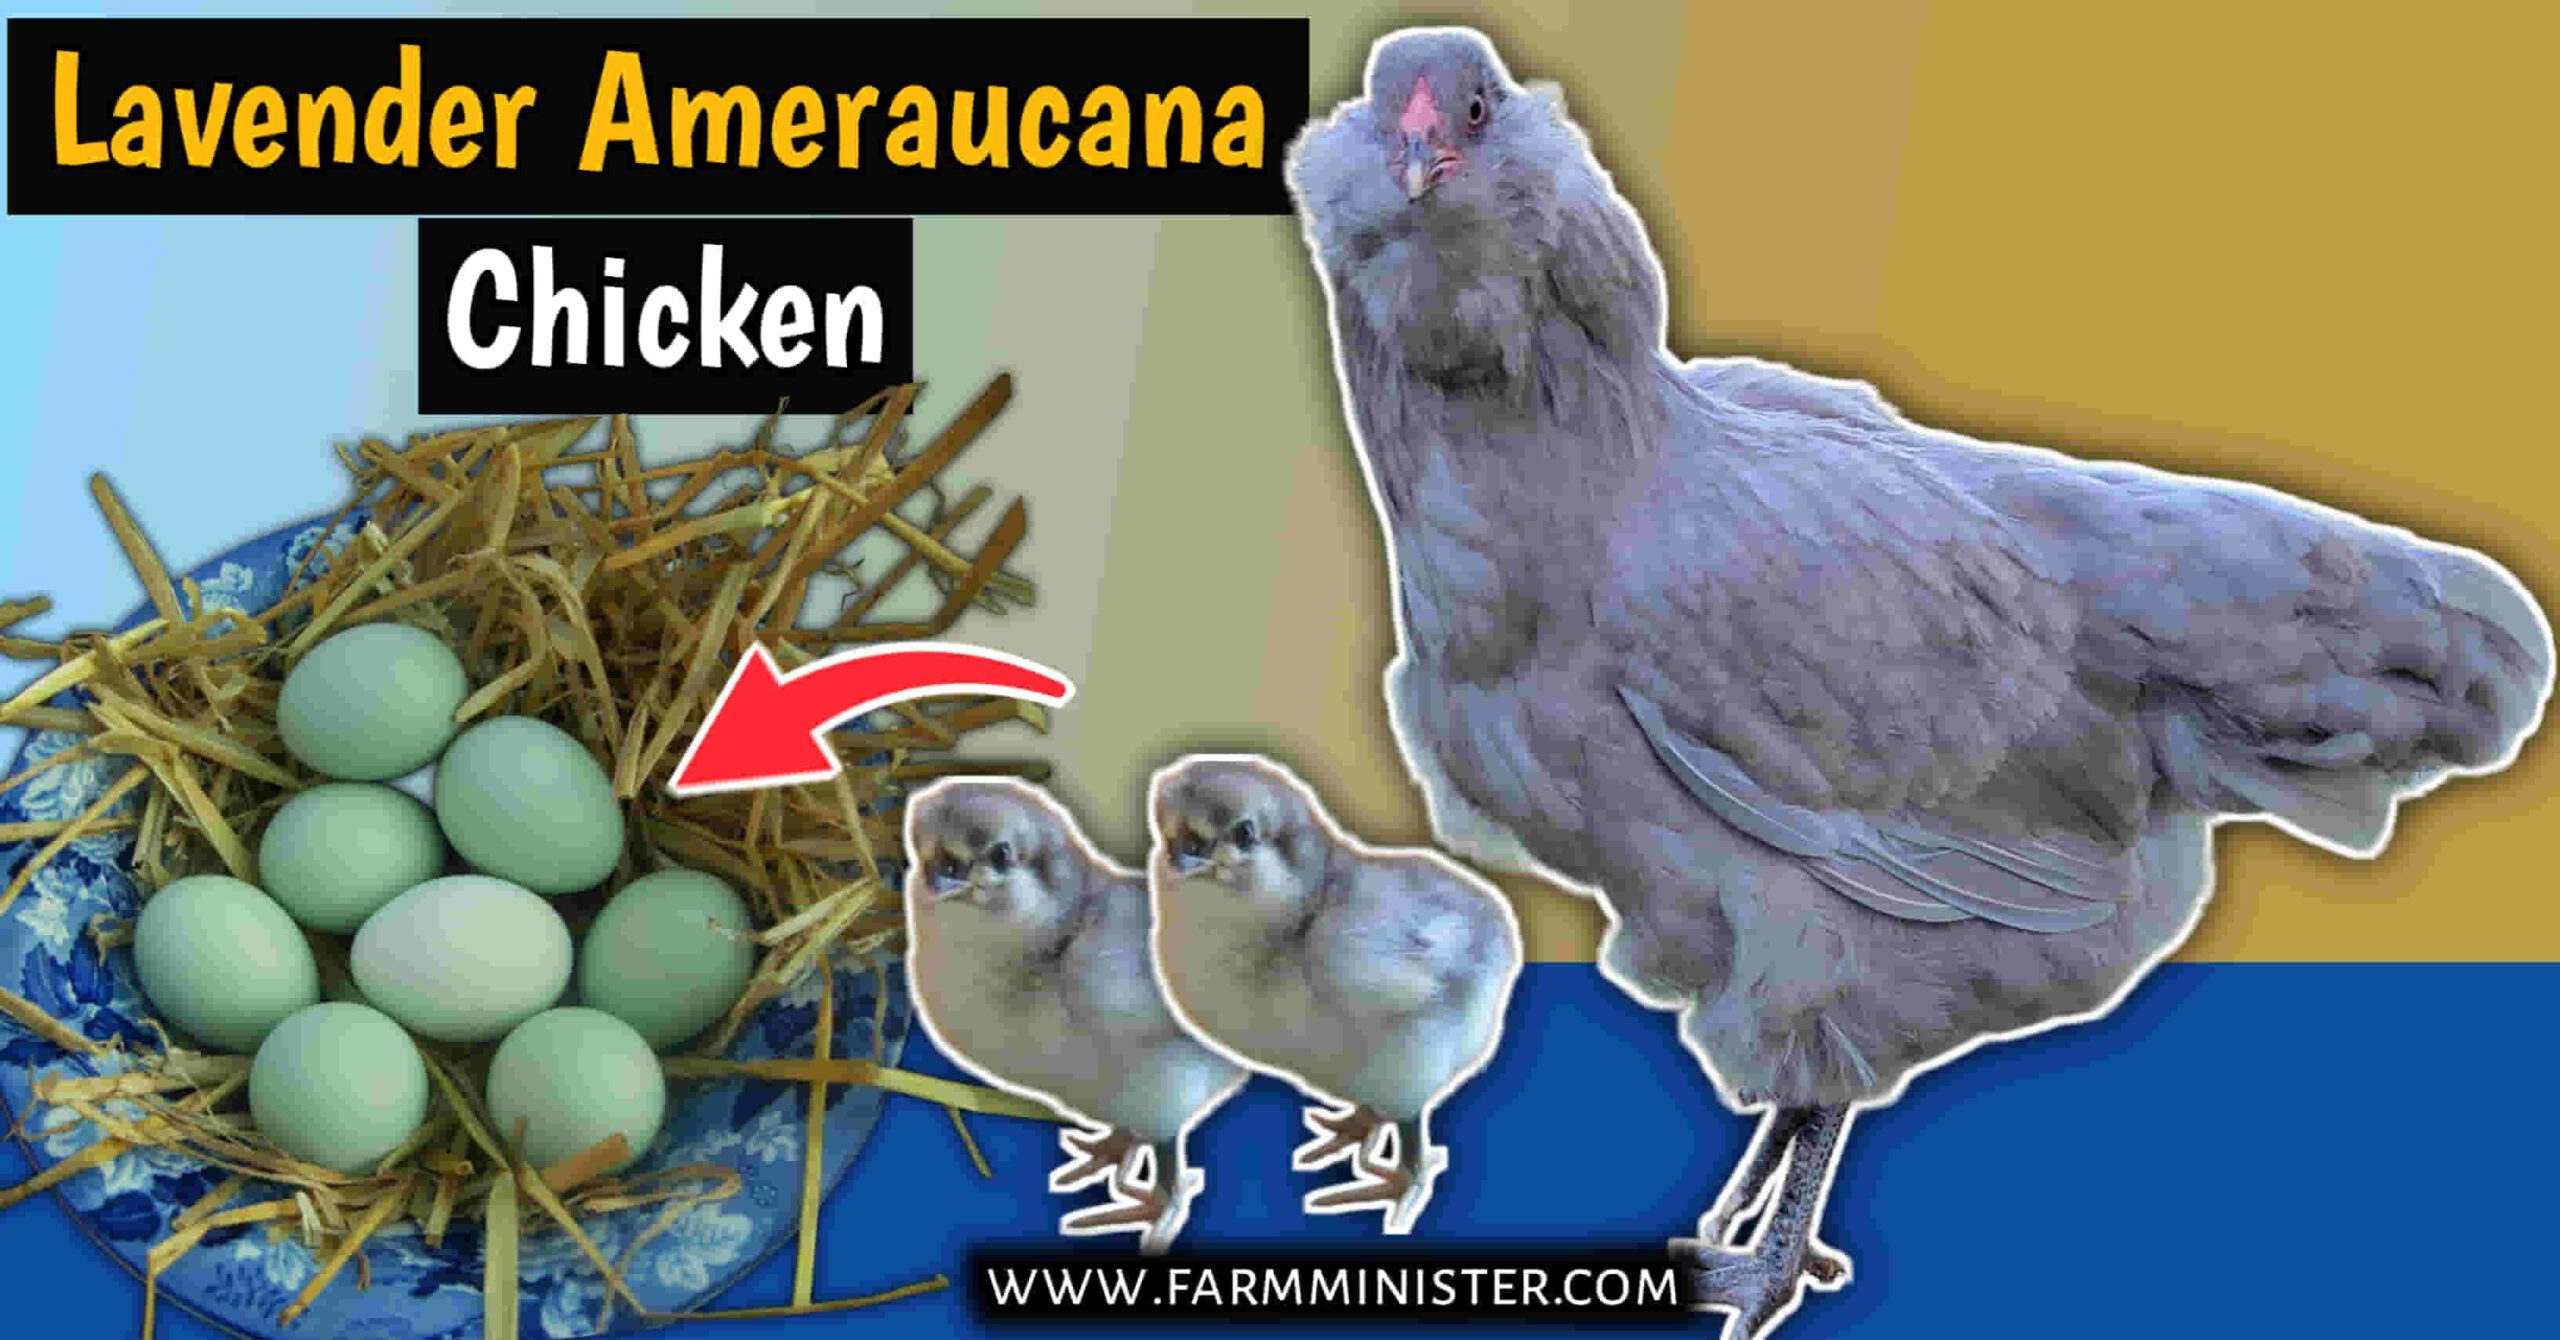 lavender ameraucana chicken